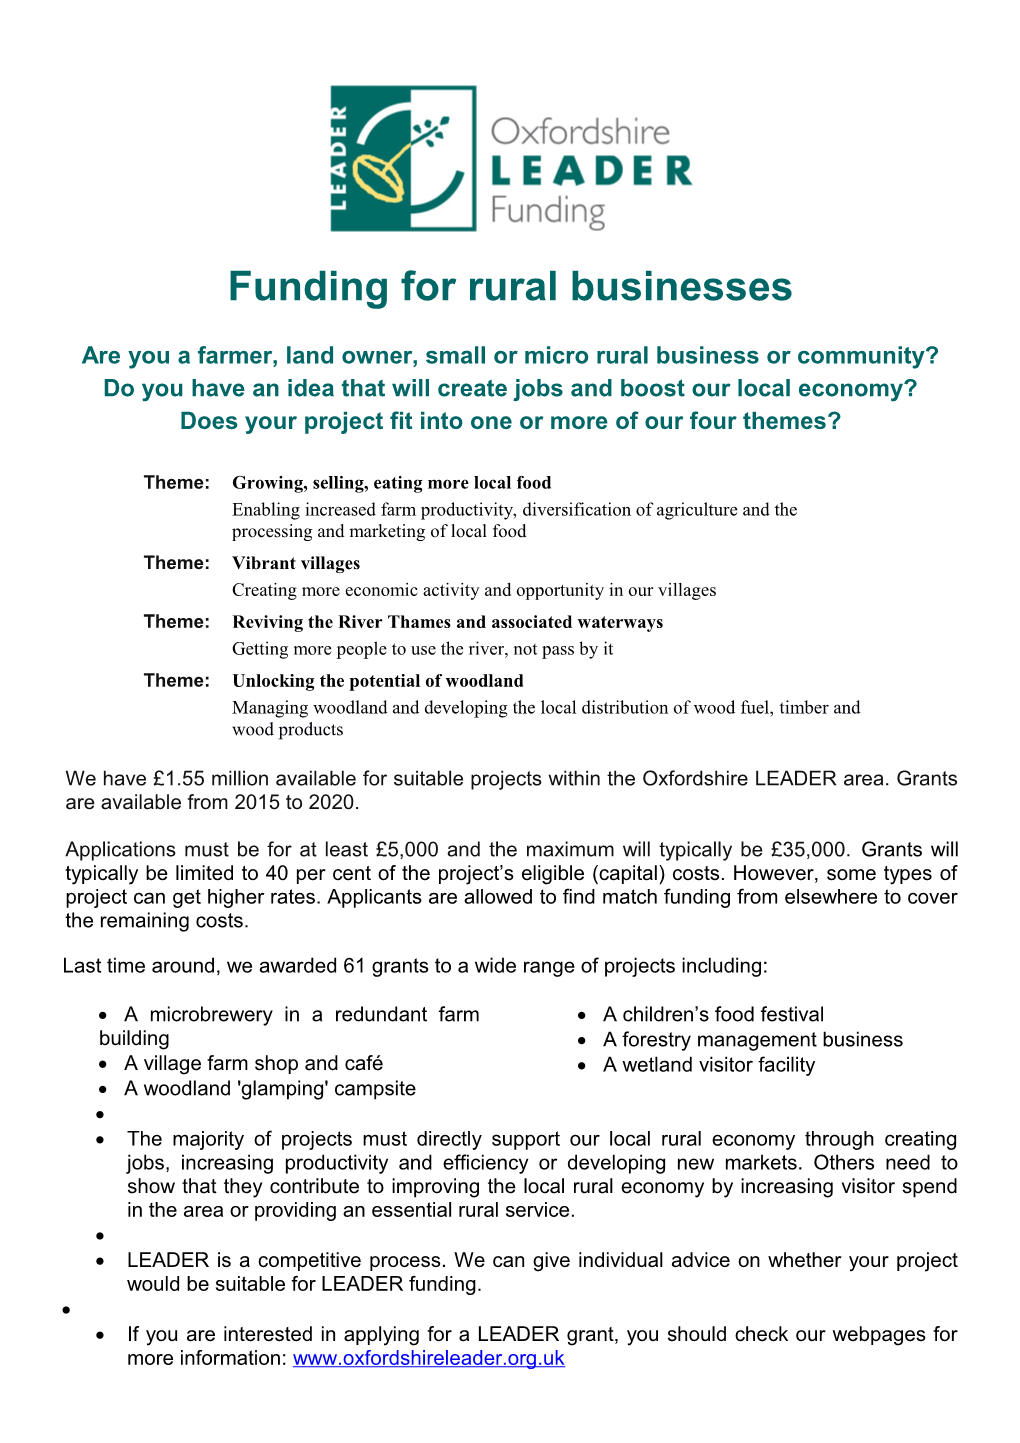 Funding for Rural Businesses